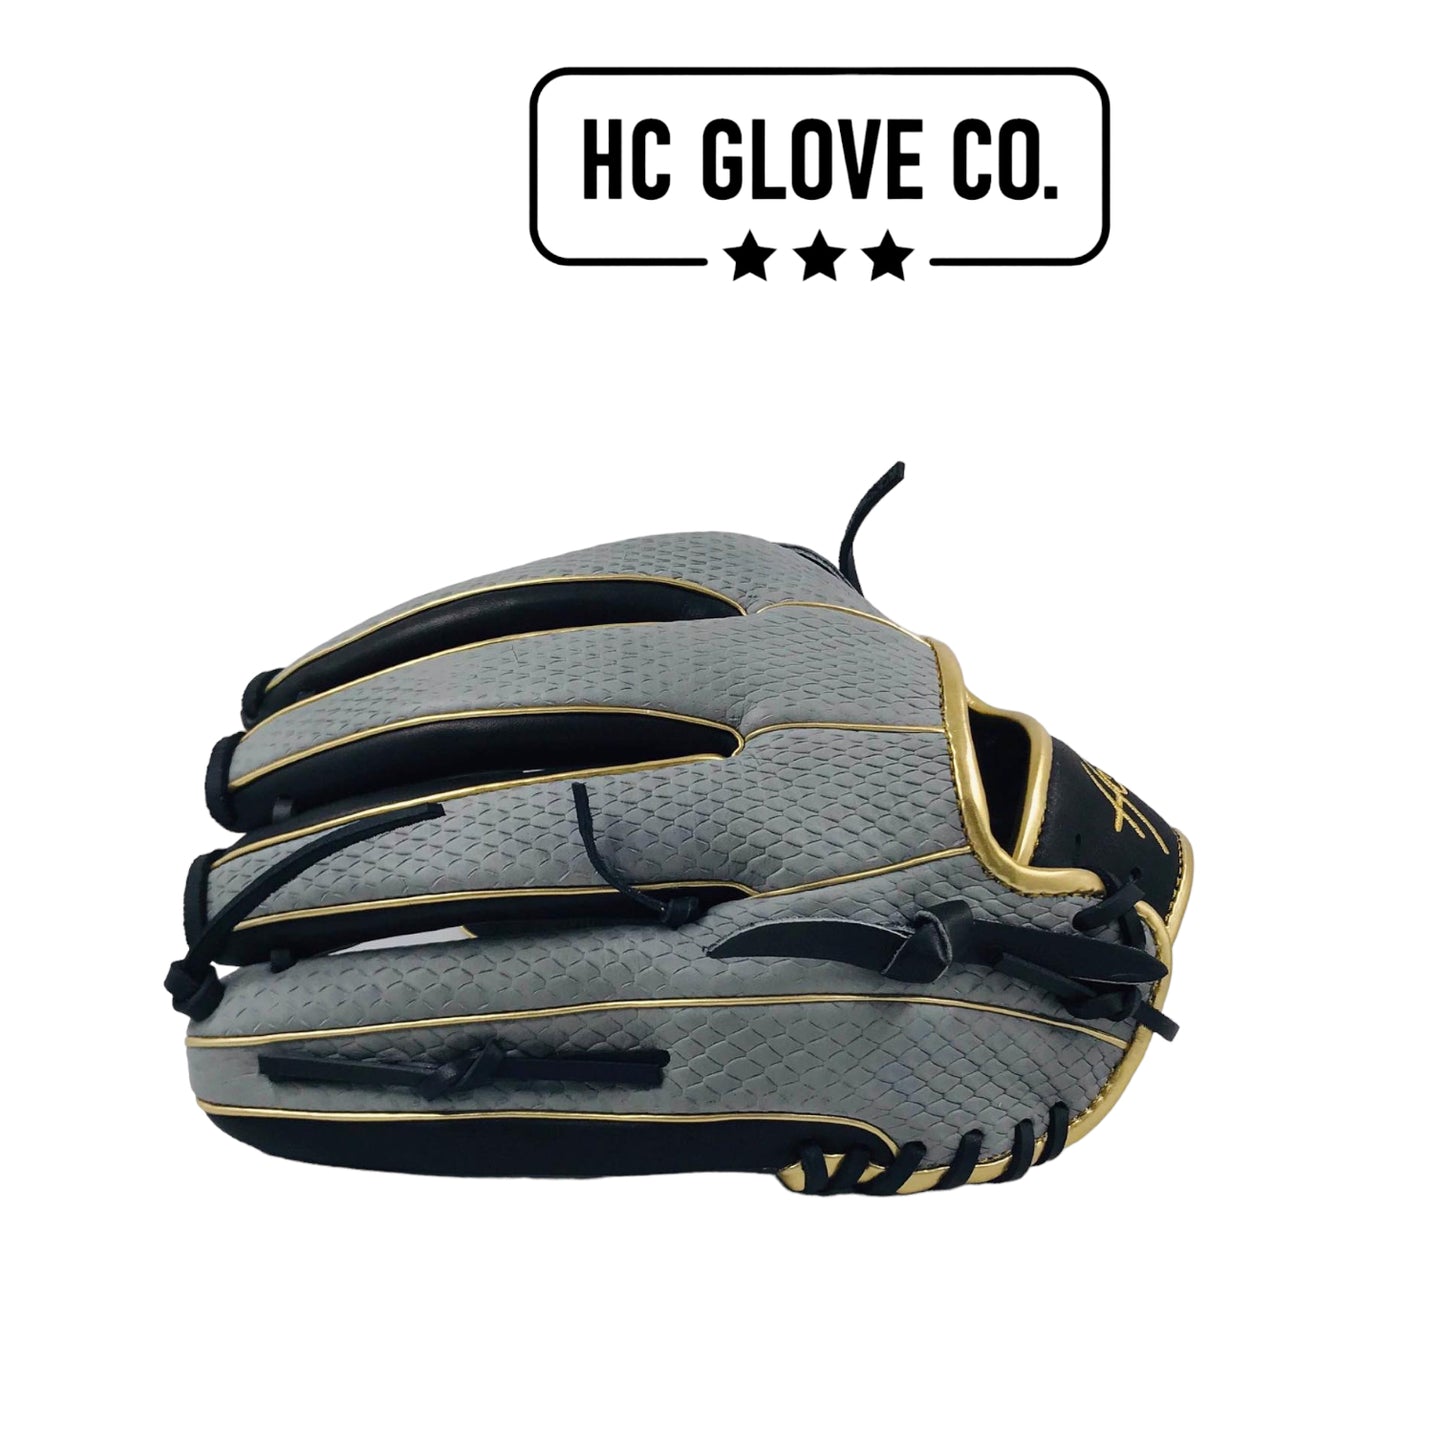 Custom Fielding Gloves